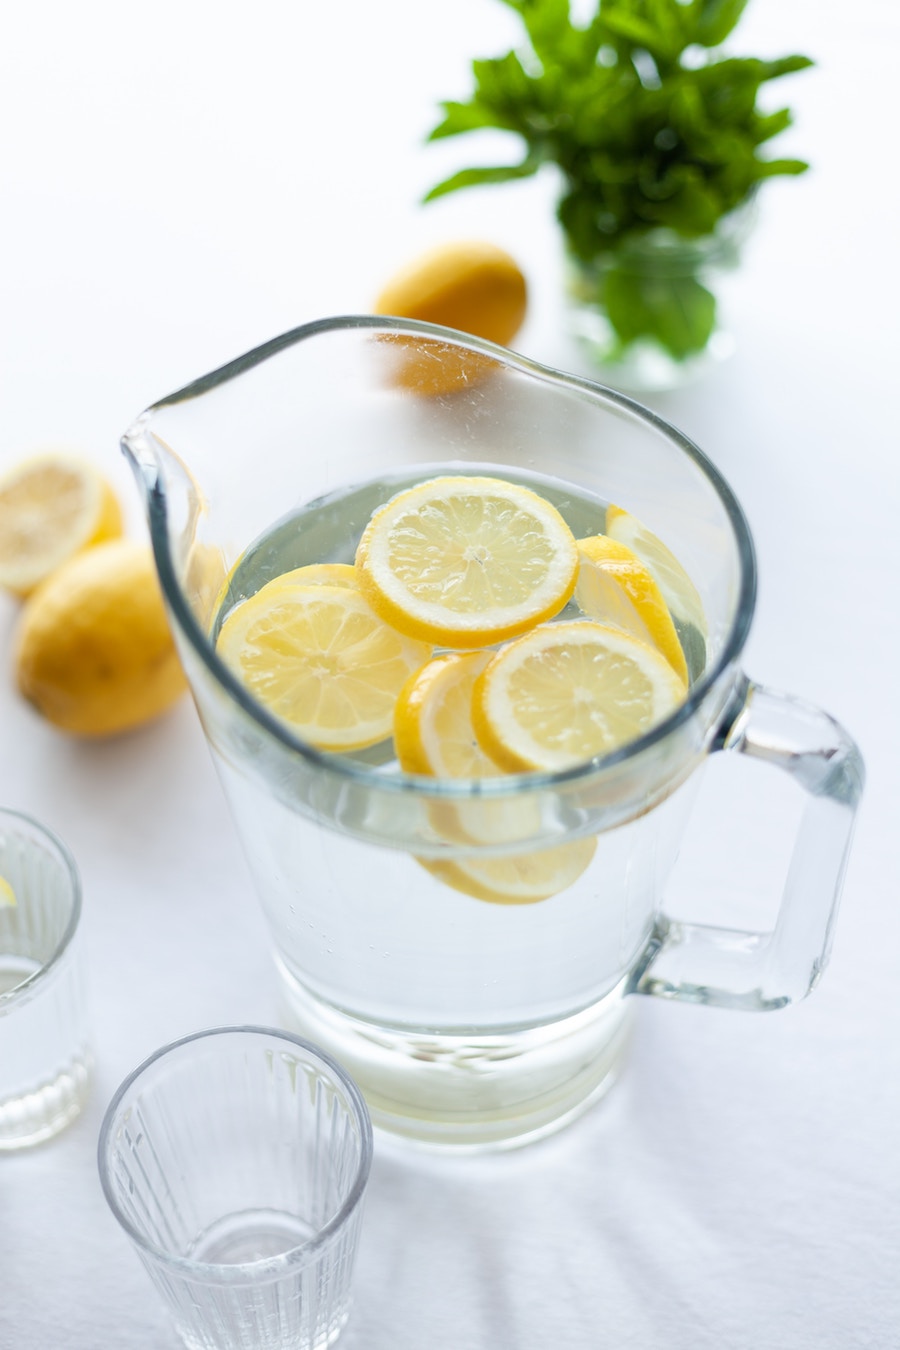 Lemon water benefits